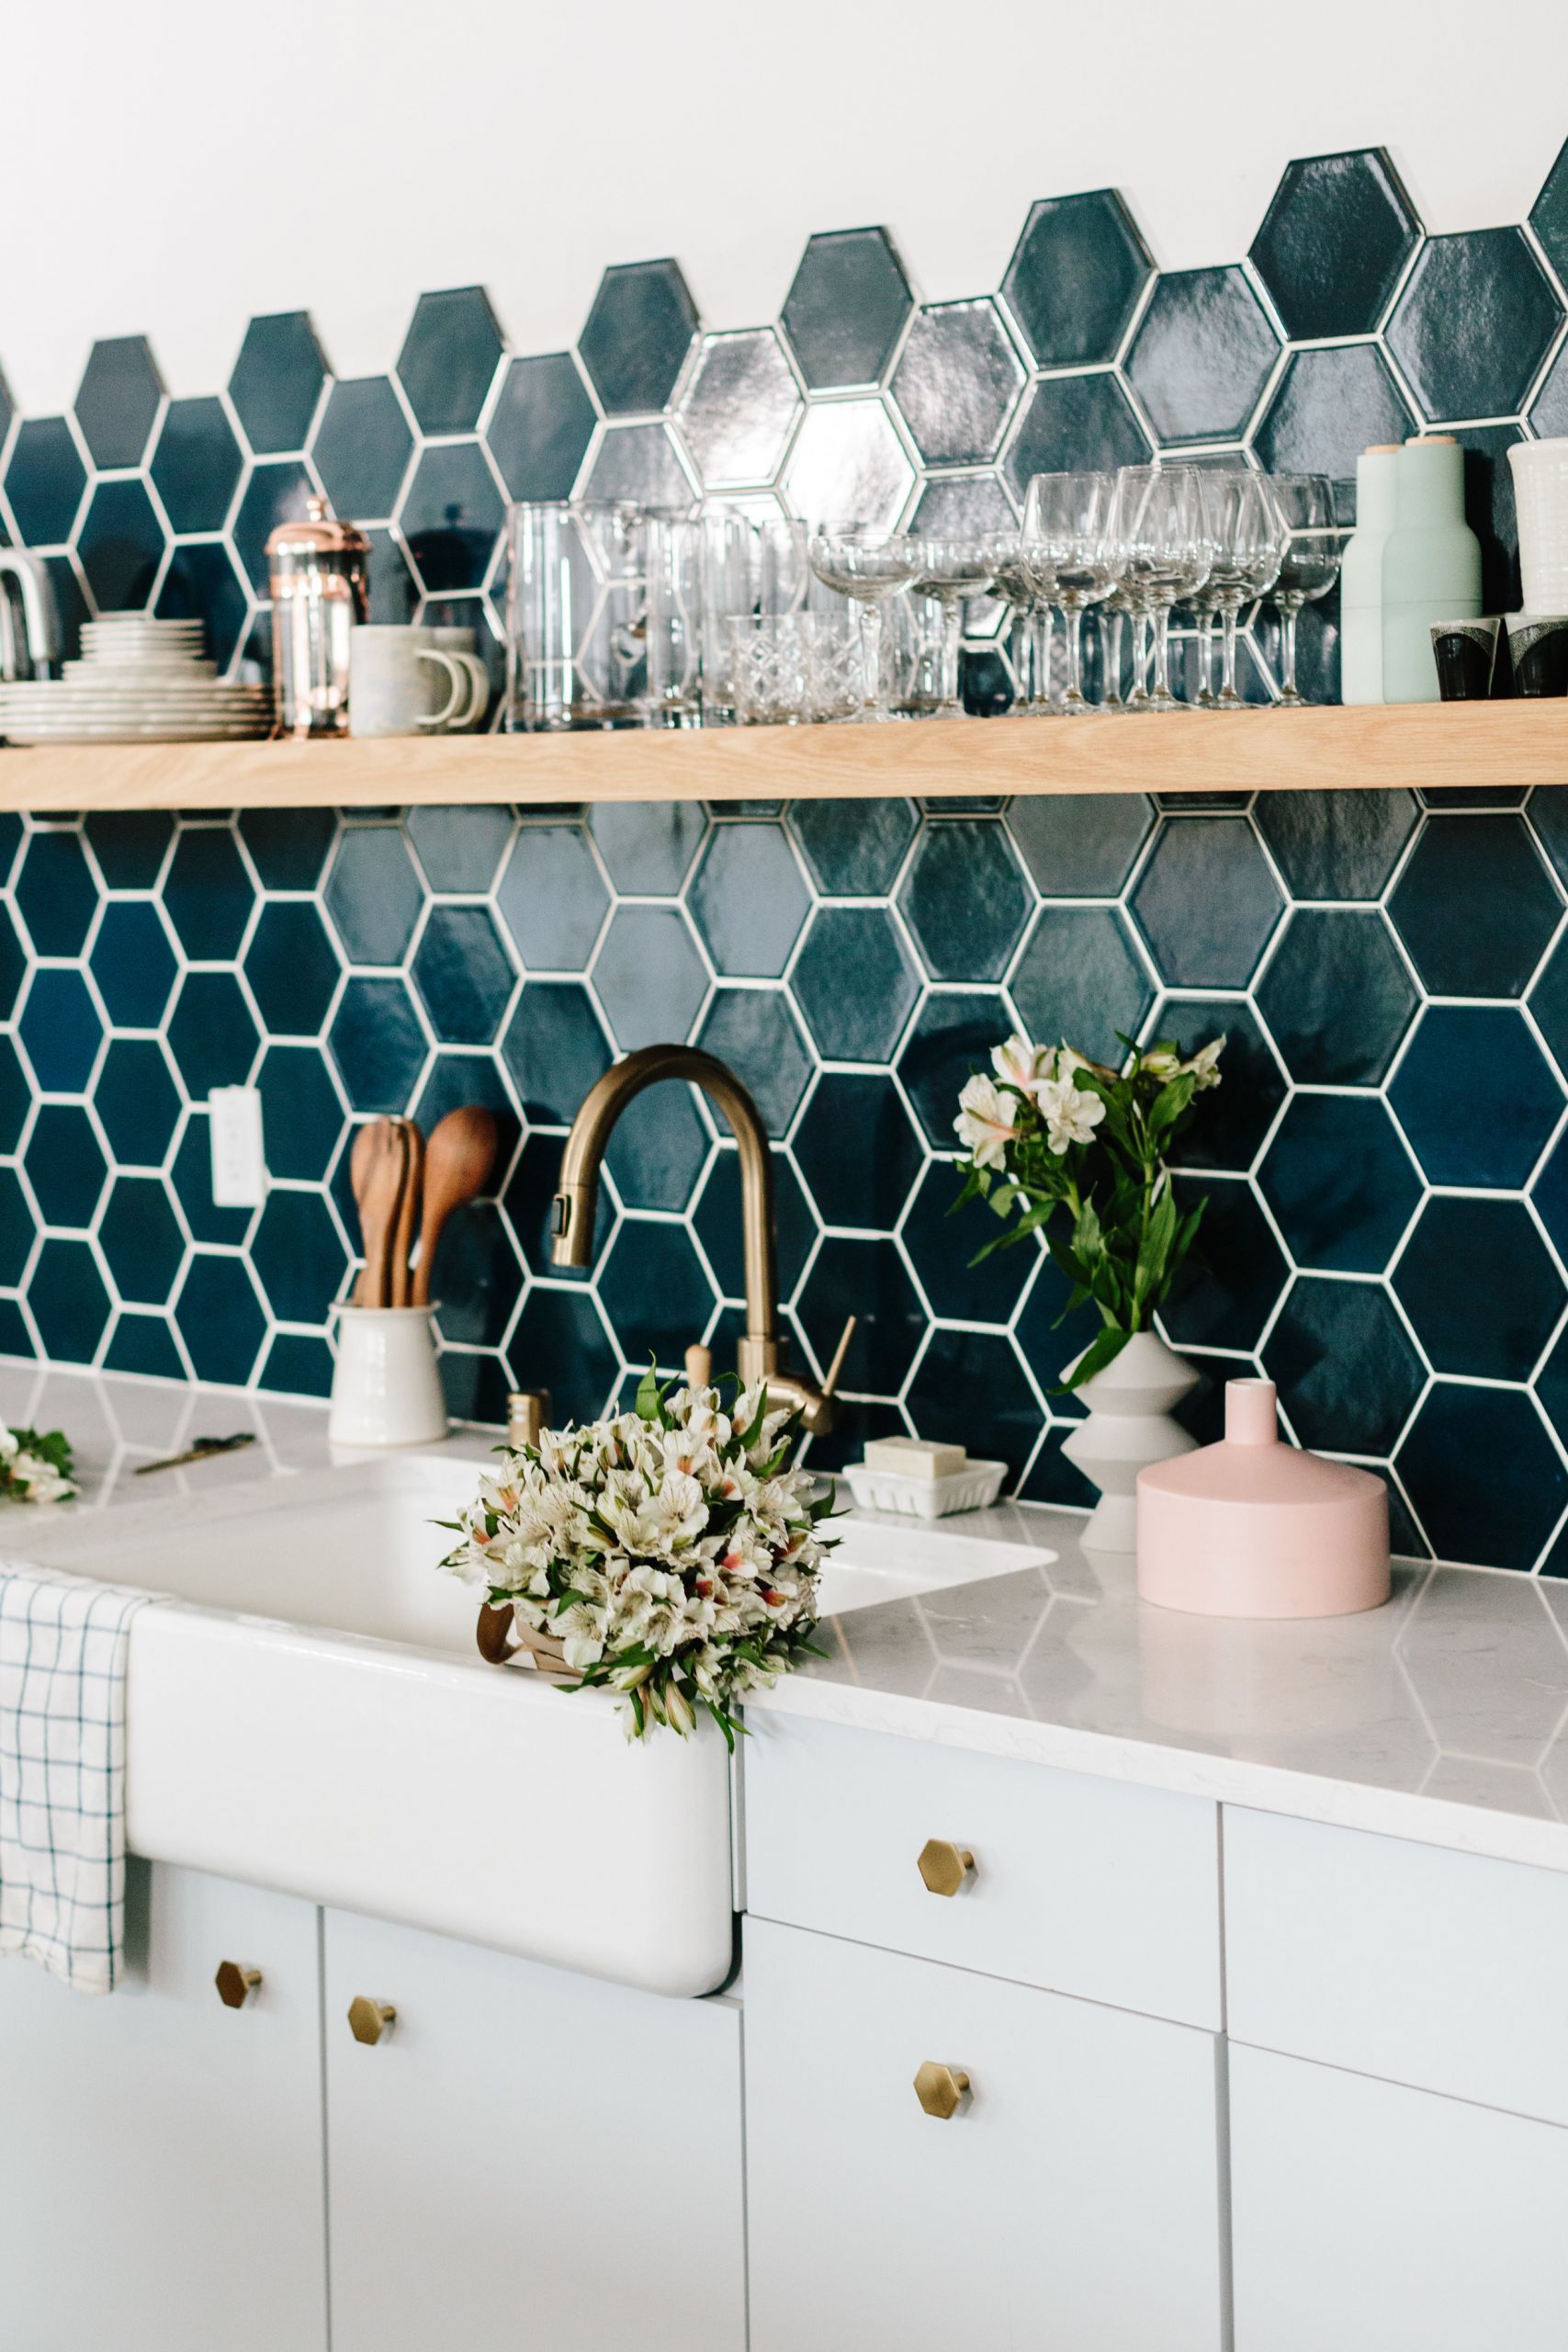 Green Tile Backsplash Kitchen
 20 Kitchen Backsplash Ideas That Totally Steal the Show